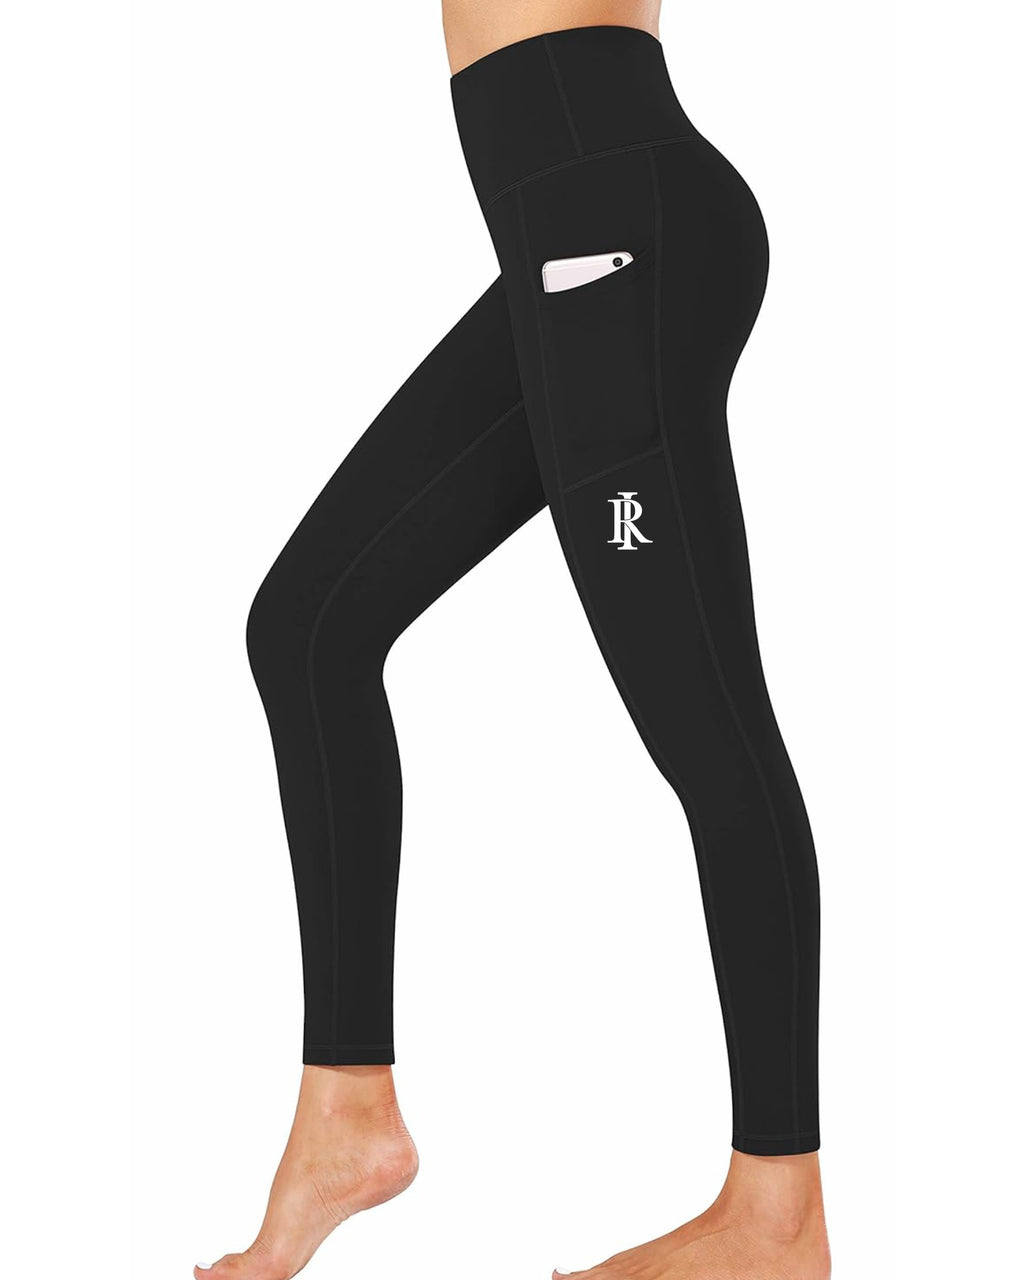 Monogram Yoga Leggings with Pockets - Black